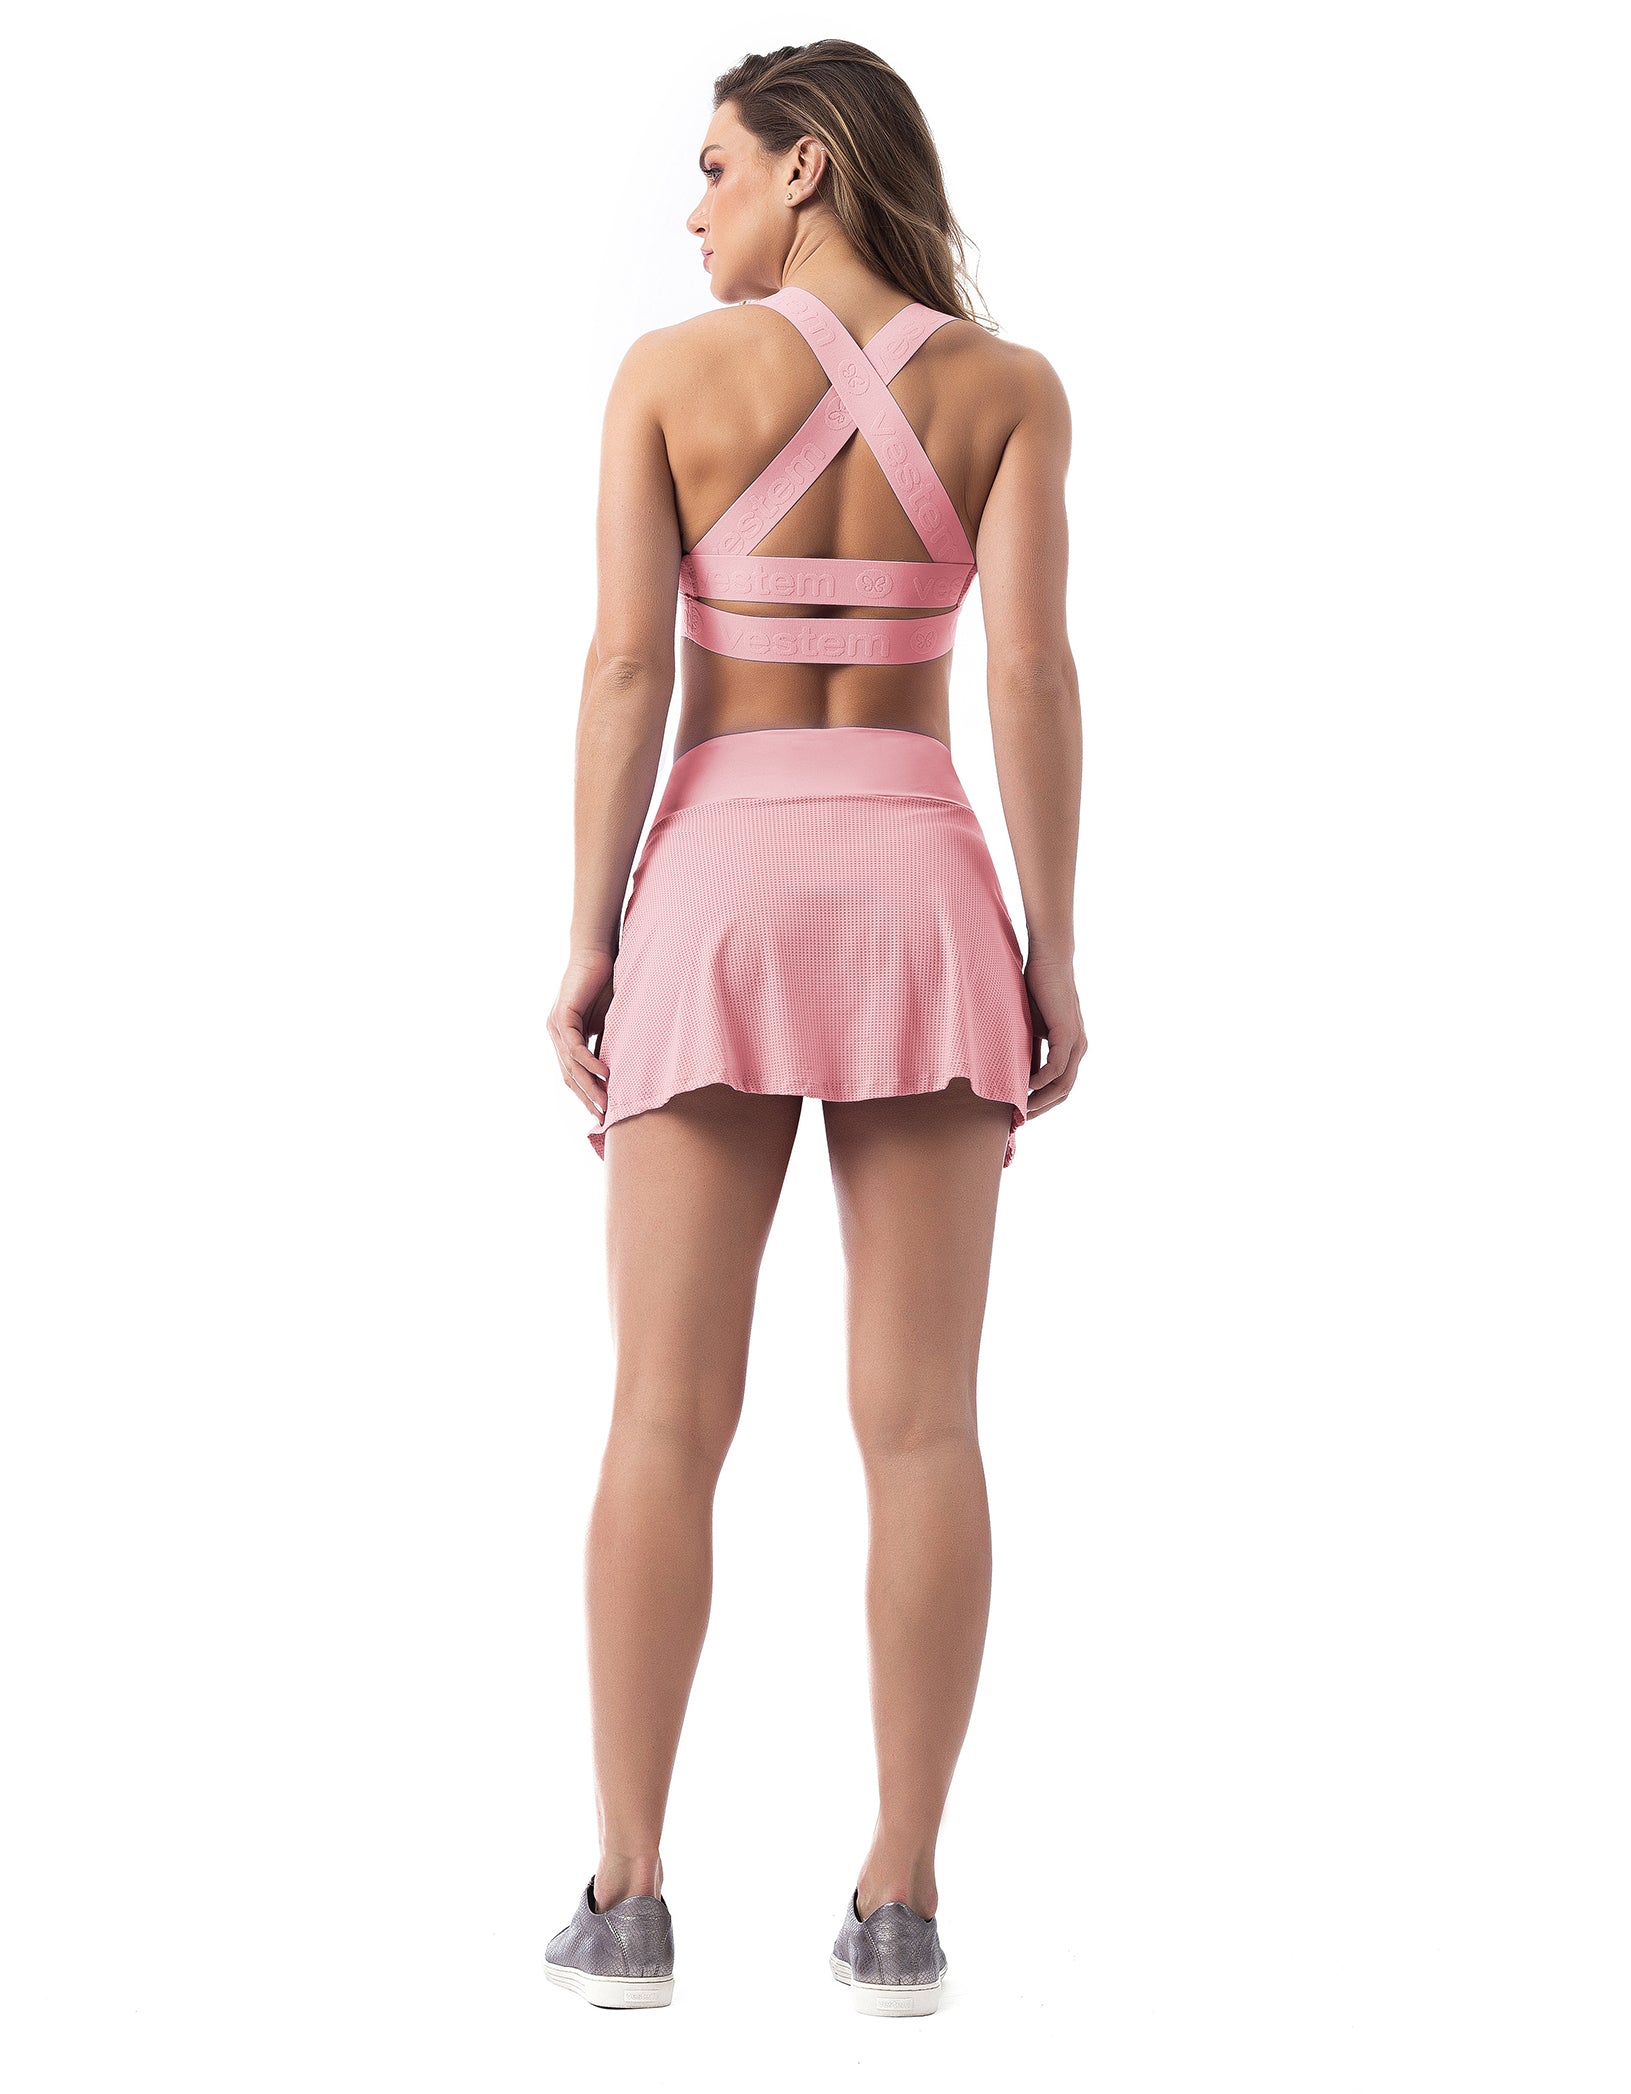 Vestem - Skirt Camy pink Romance - SA126.ESS.C0243